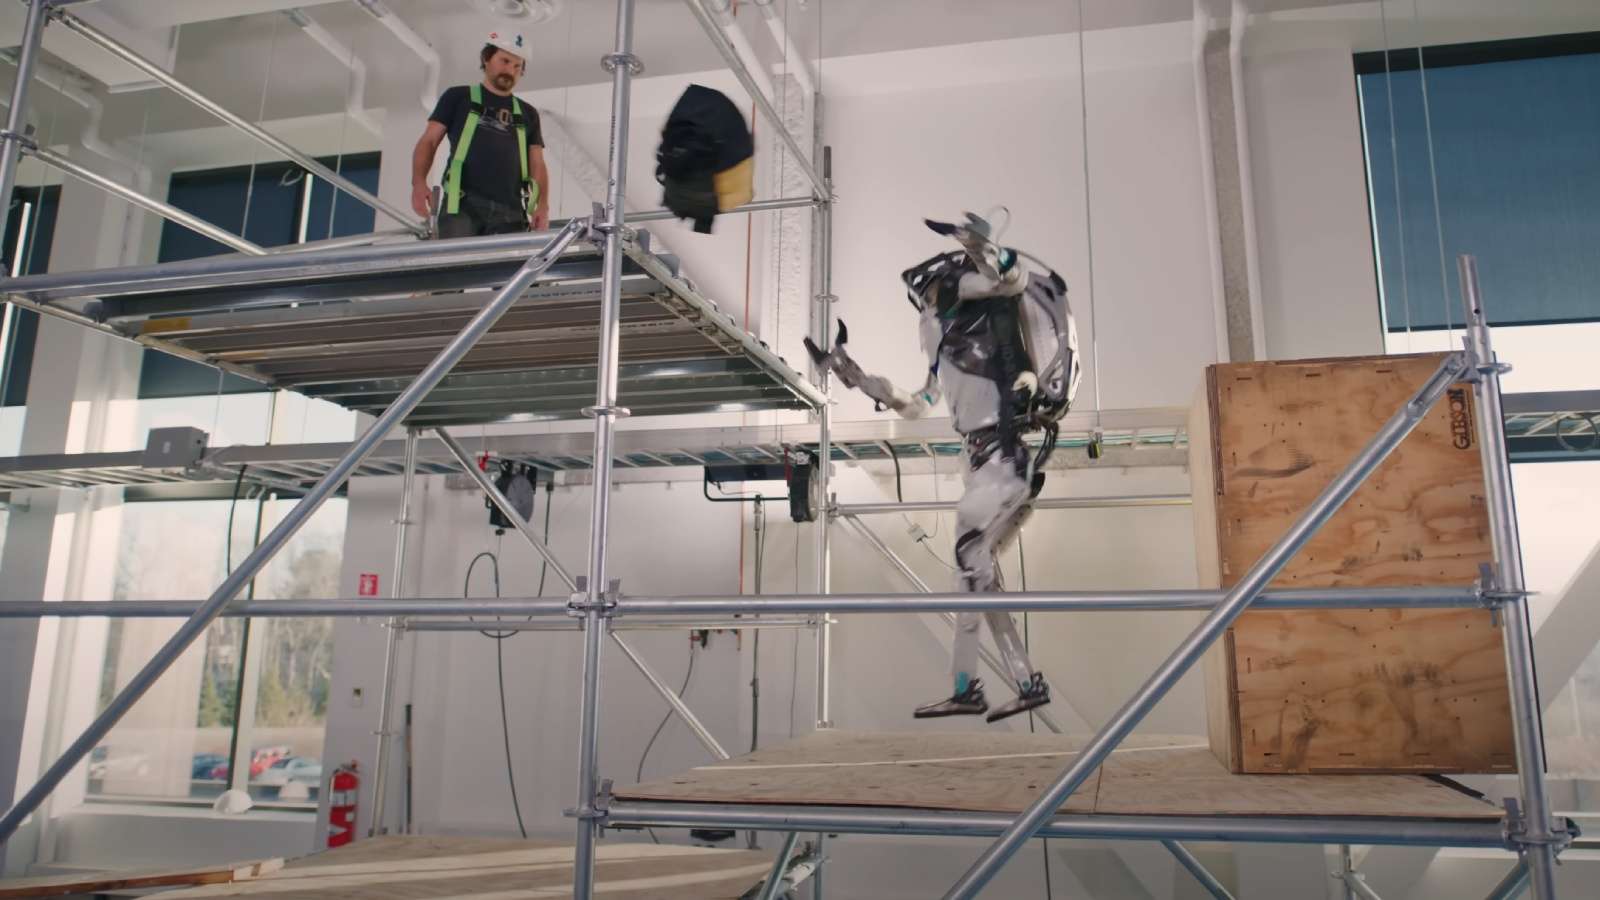 Boston Dynamics Atlas robot thwoing toolbox while jumping